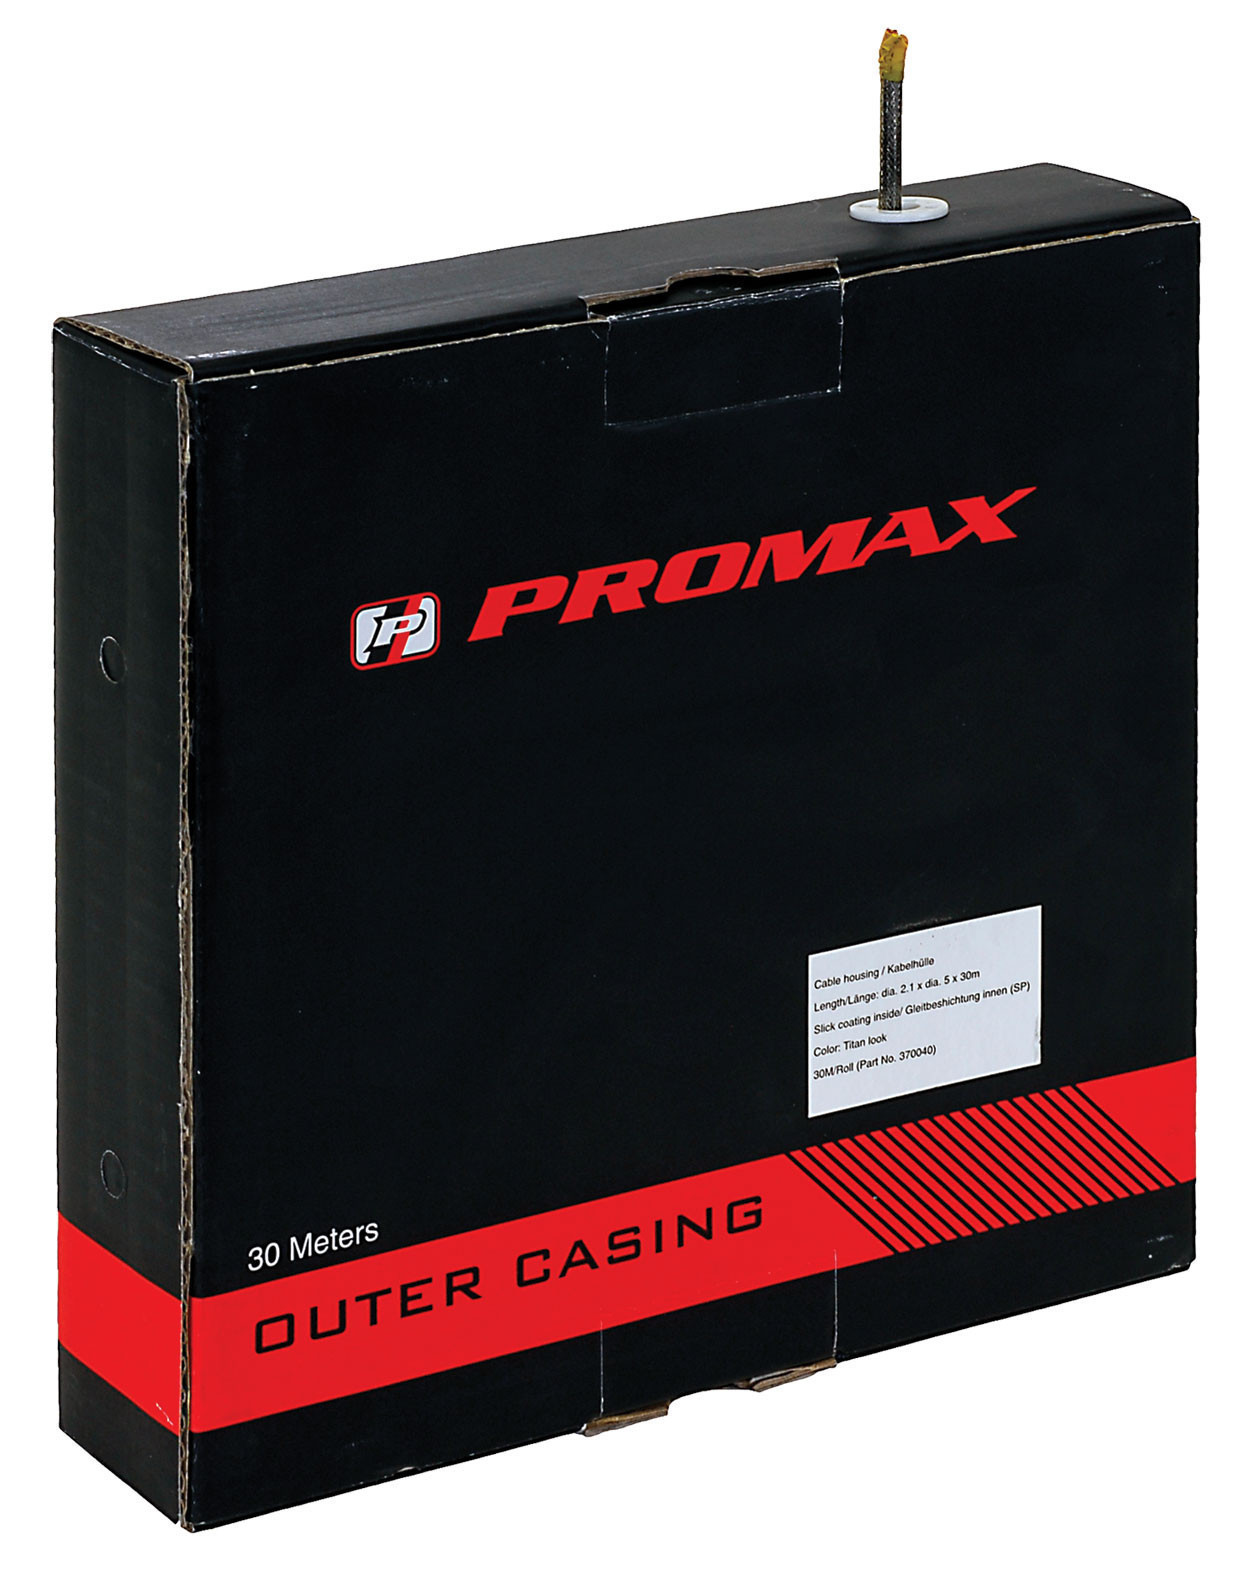  Promax Outer Casing For Derailleur Cables   Promax Outer Casing For Derailleur Cables 